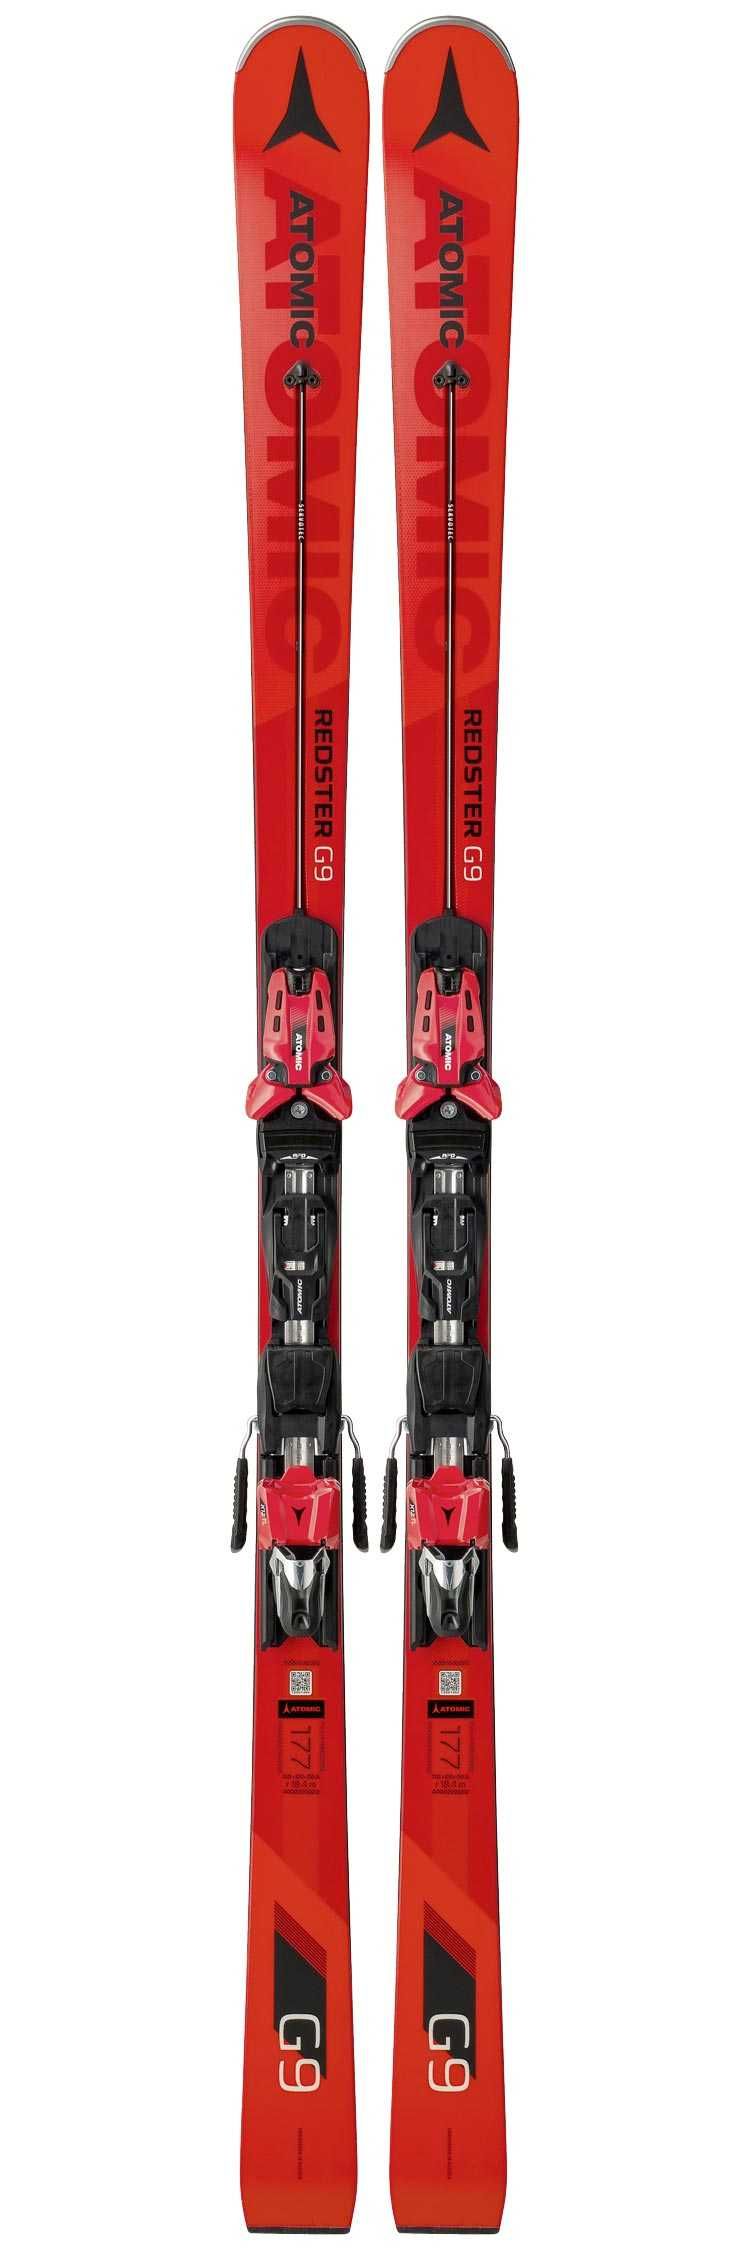 Achat pack ski Atomic Redster G9 2018 d'occasion + Fix X12 TL chez Sports Aventure